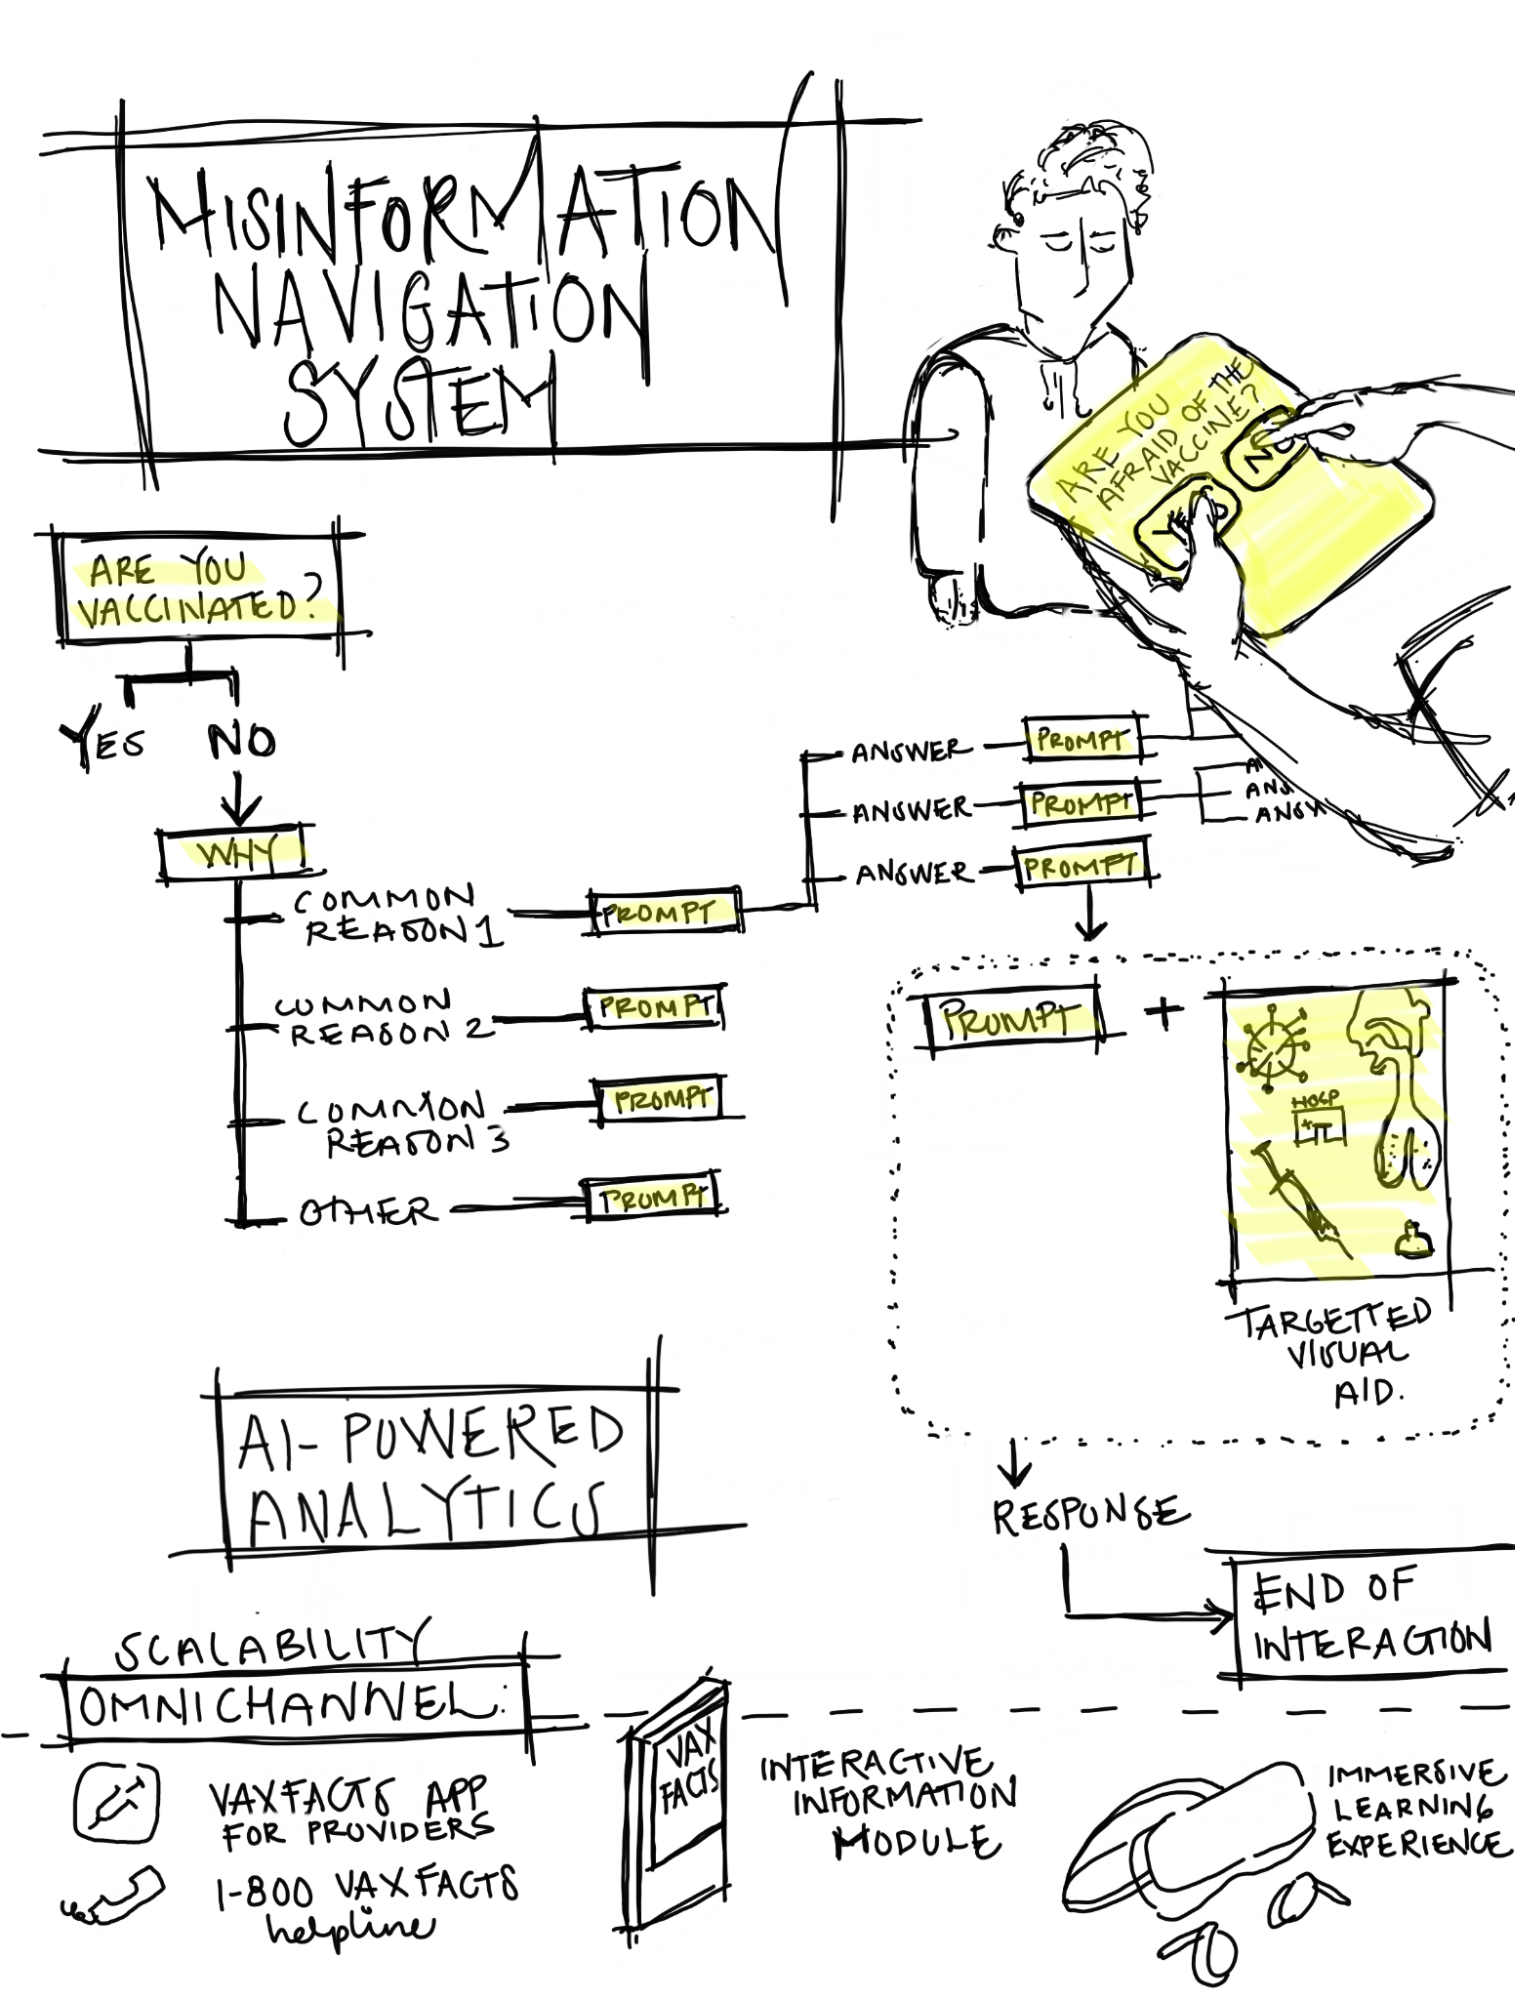 Sketch of Misinformation Navigation System decision tree